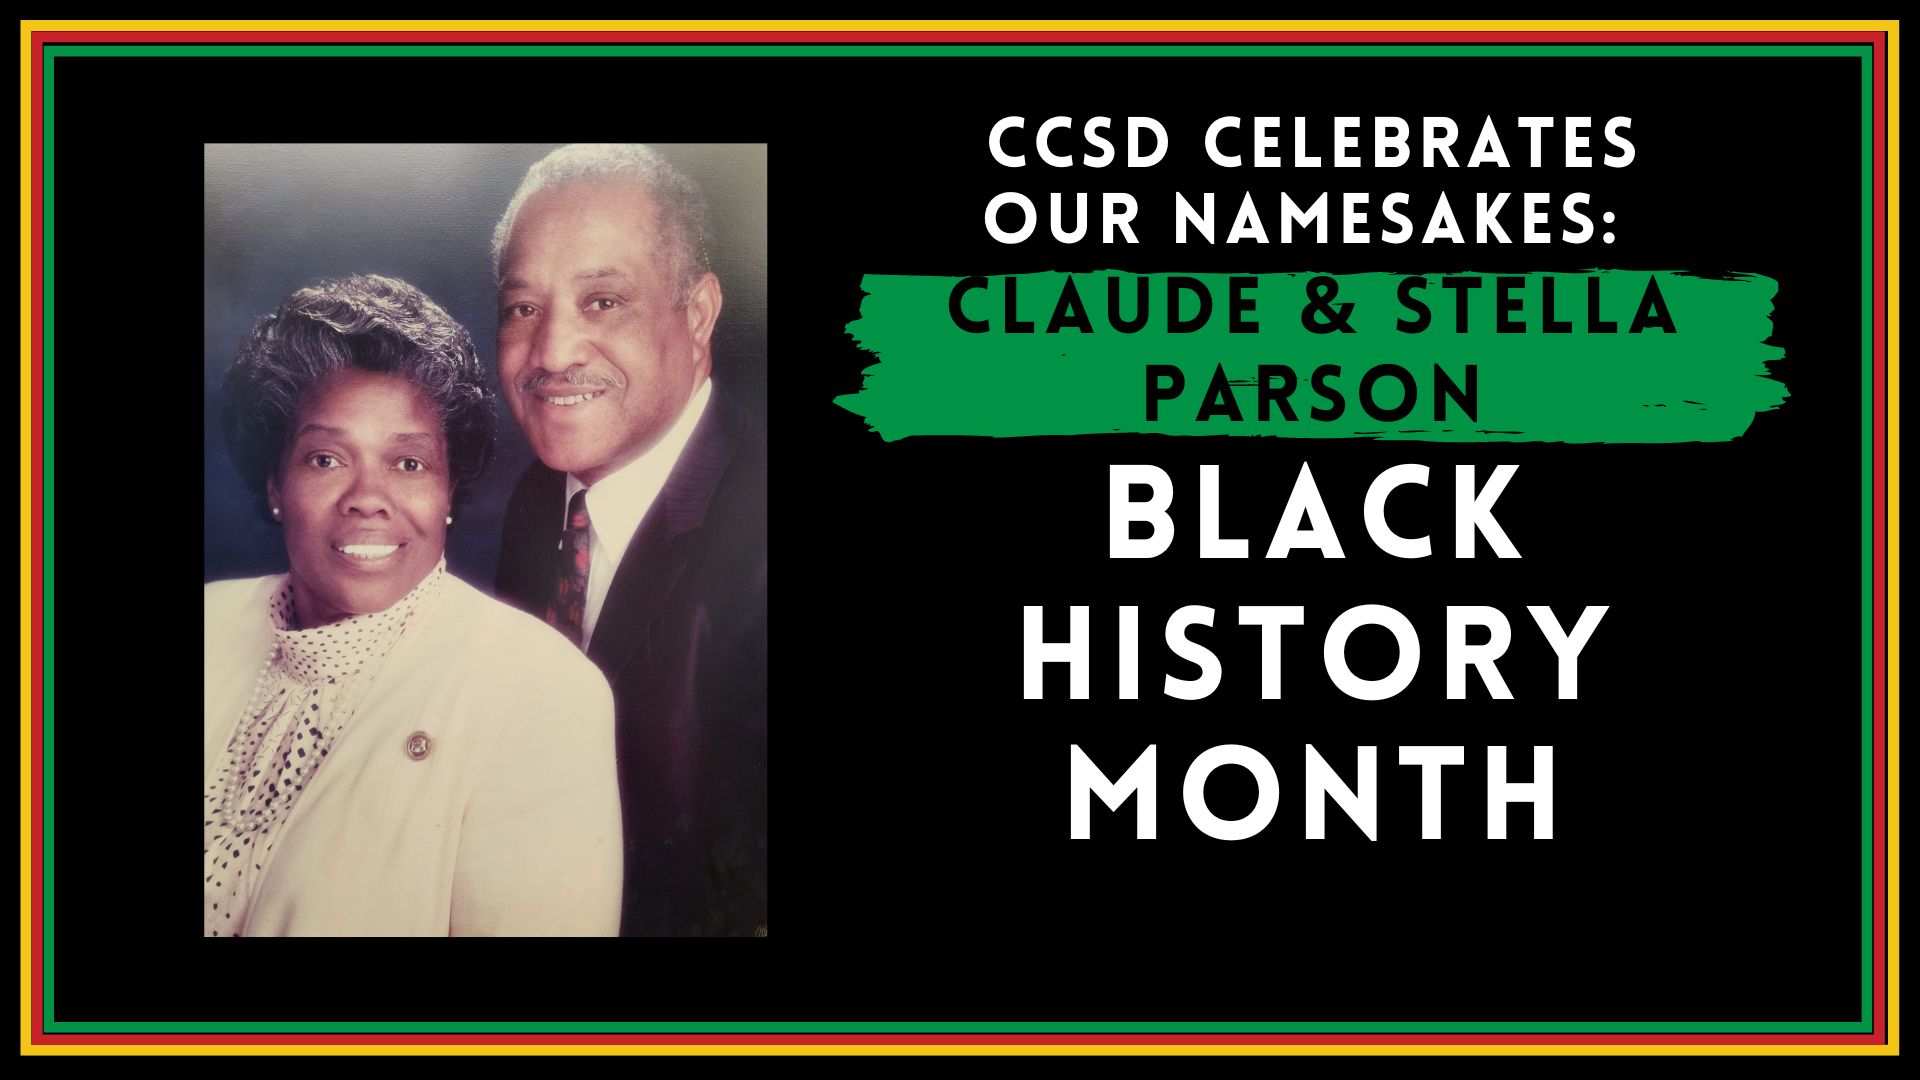 CCSD celebrates its namesakes: Claude and Stella Parson